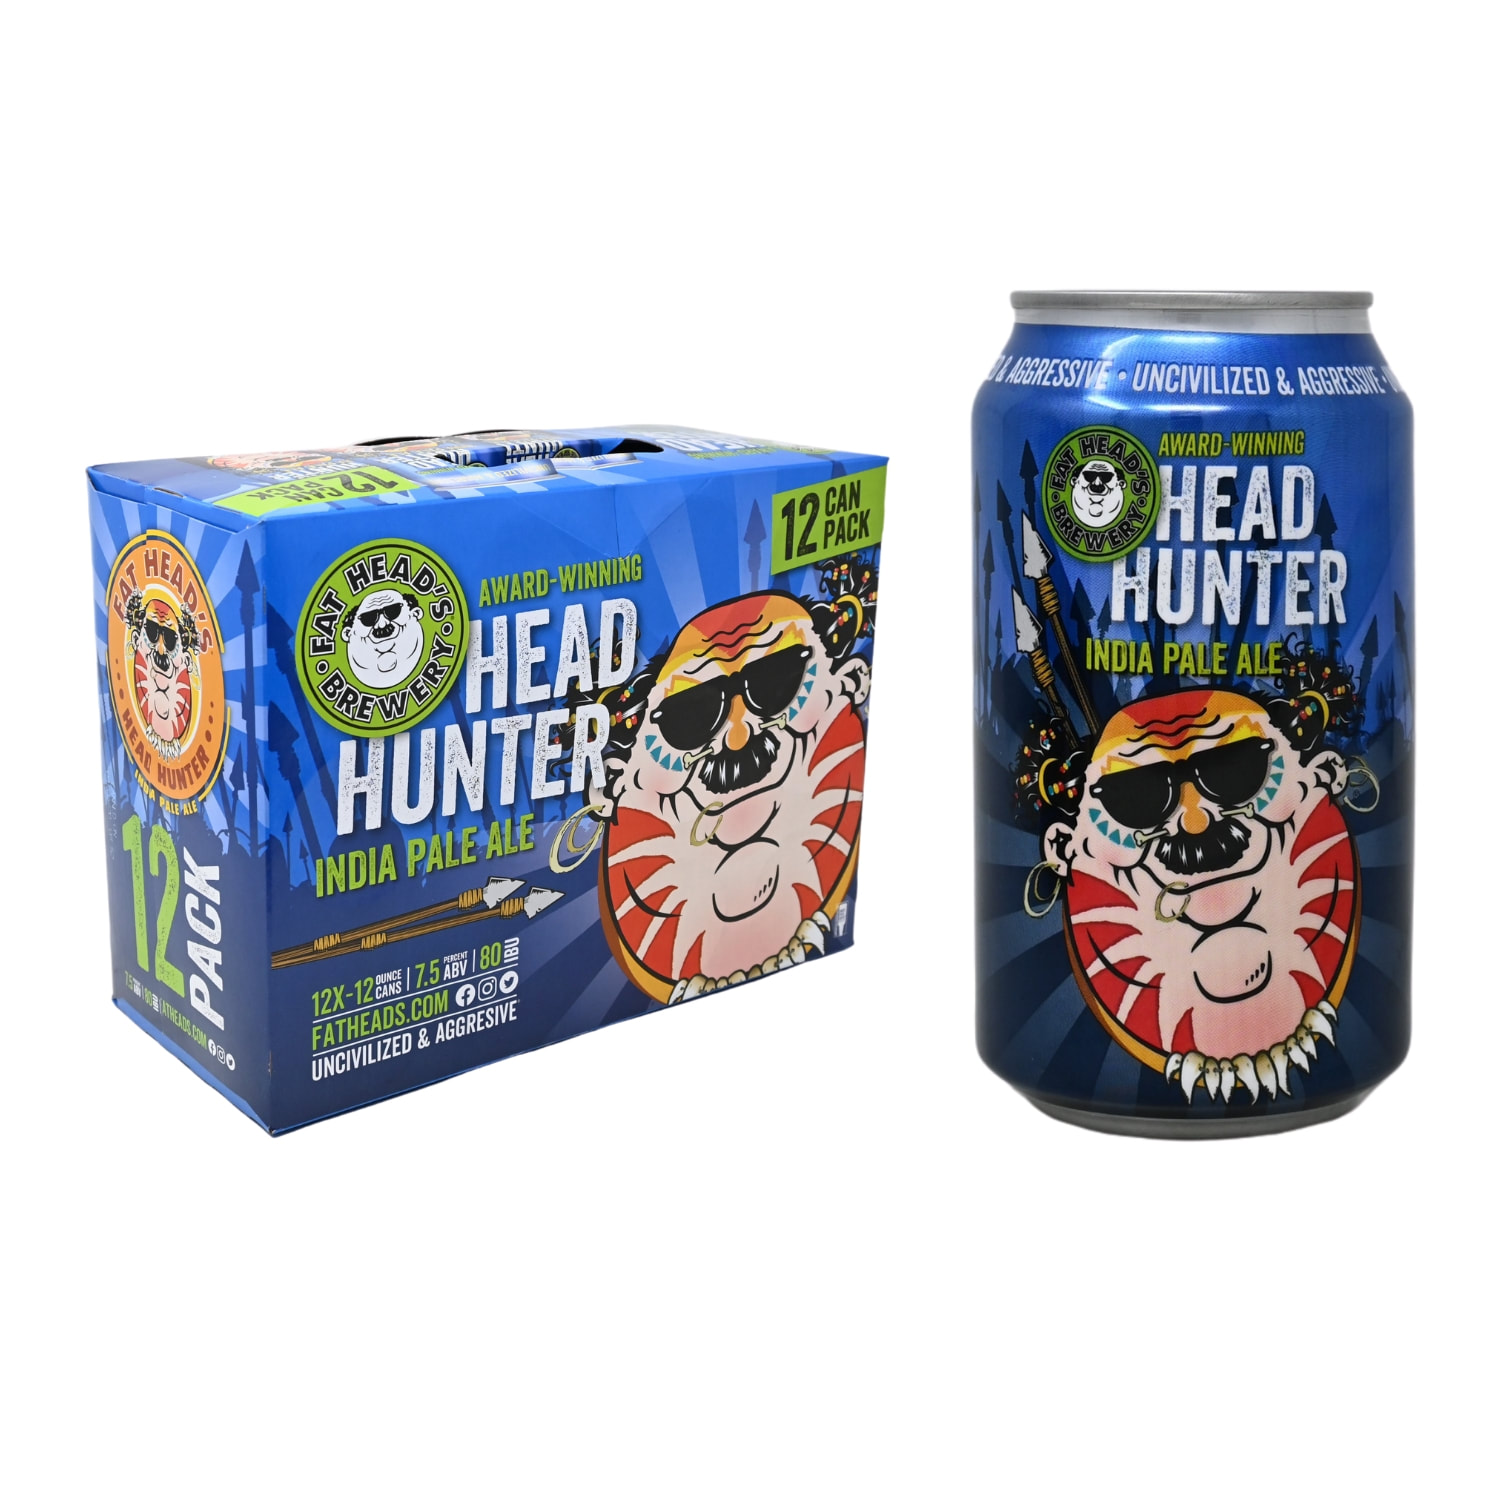 images/beer/IPA BEER/Fat Head's Head Hunter 12pk Cans.jpg